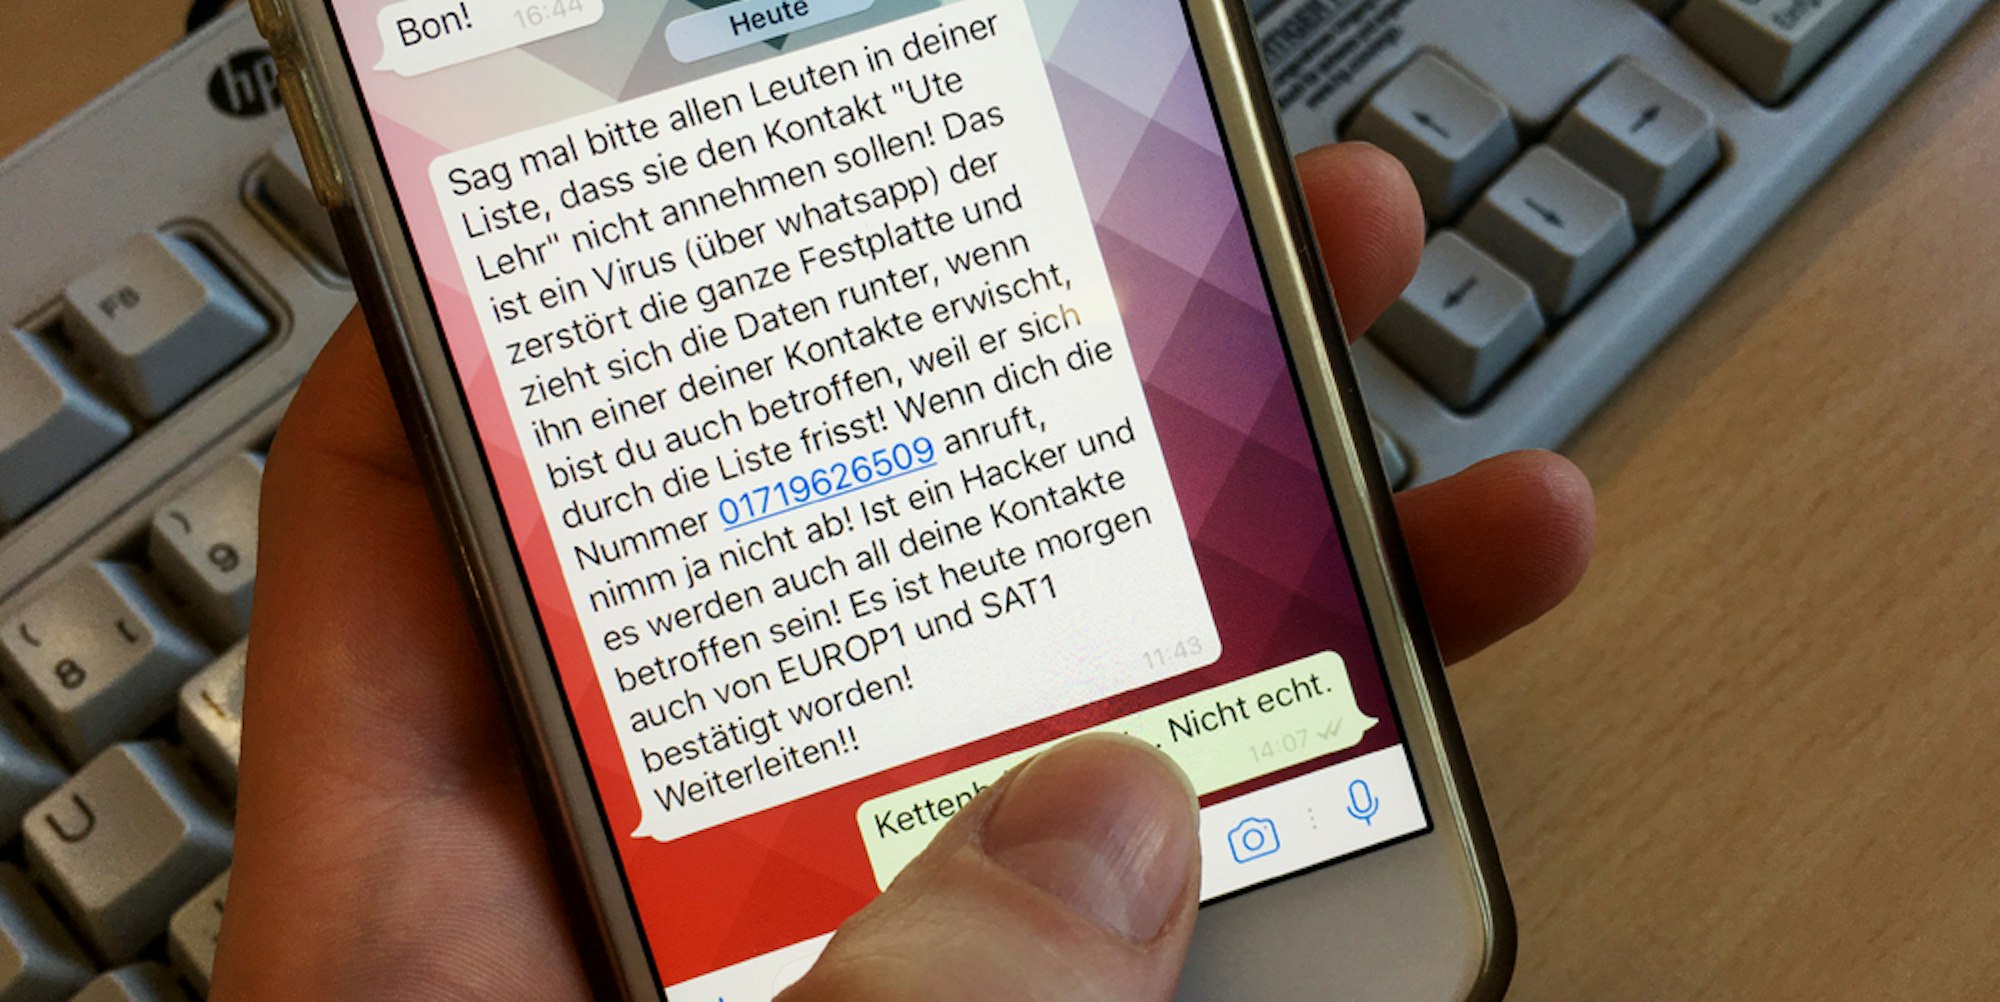 whatsapp-Kettenbrief-Ute-lehr